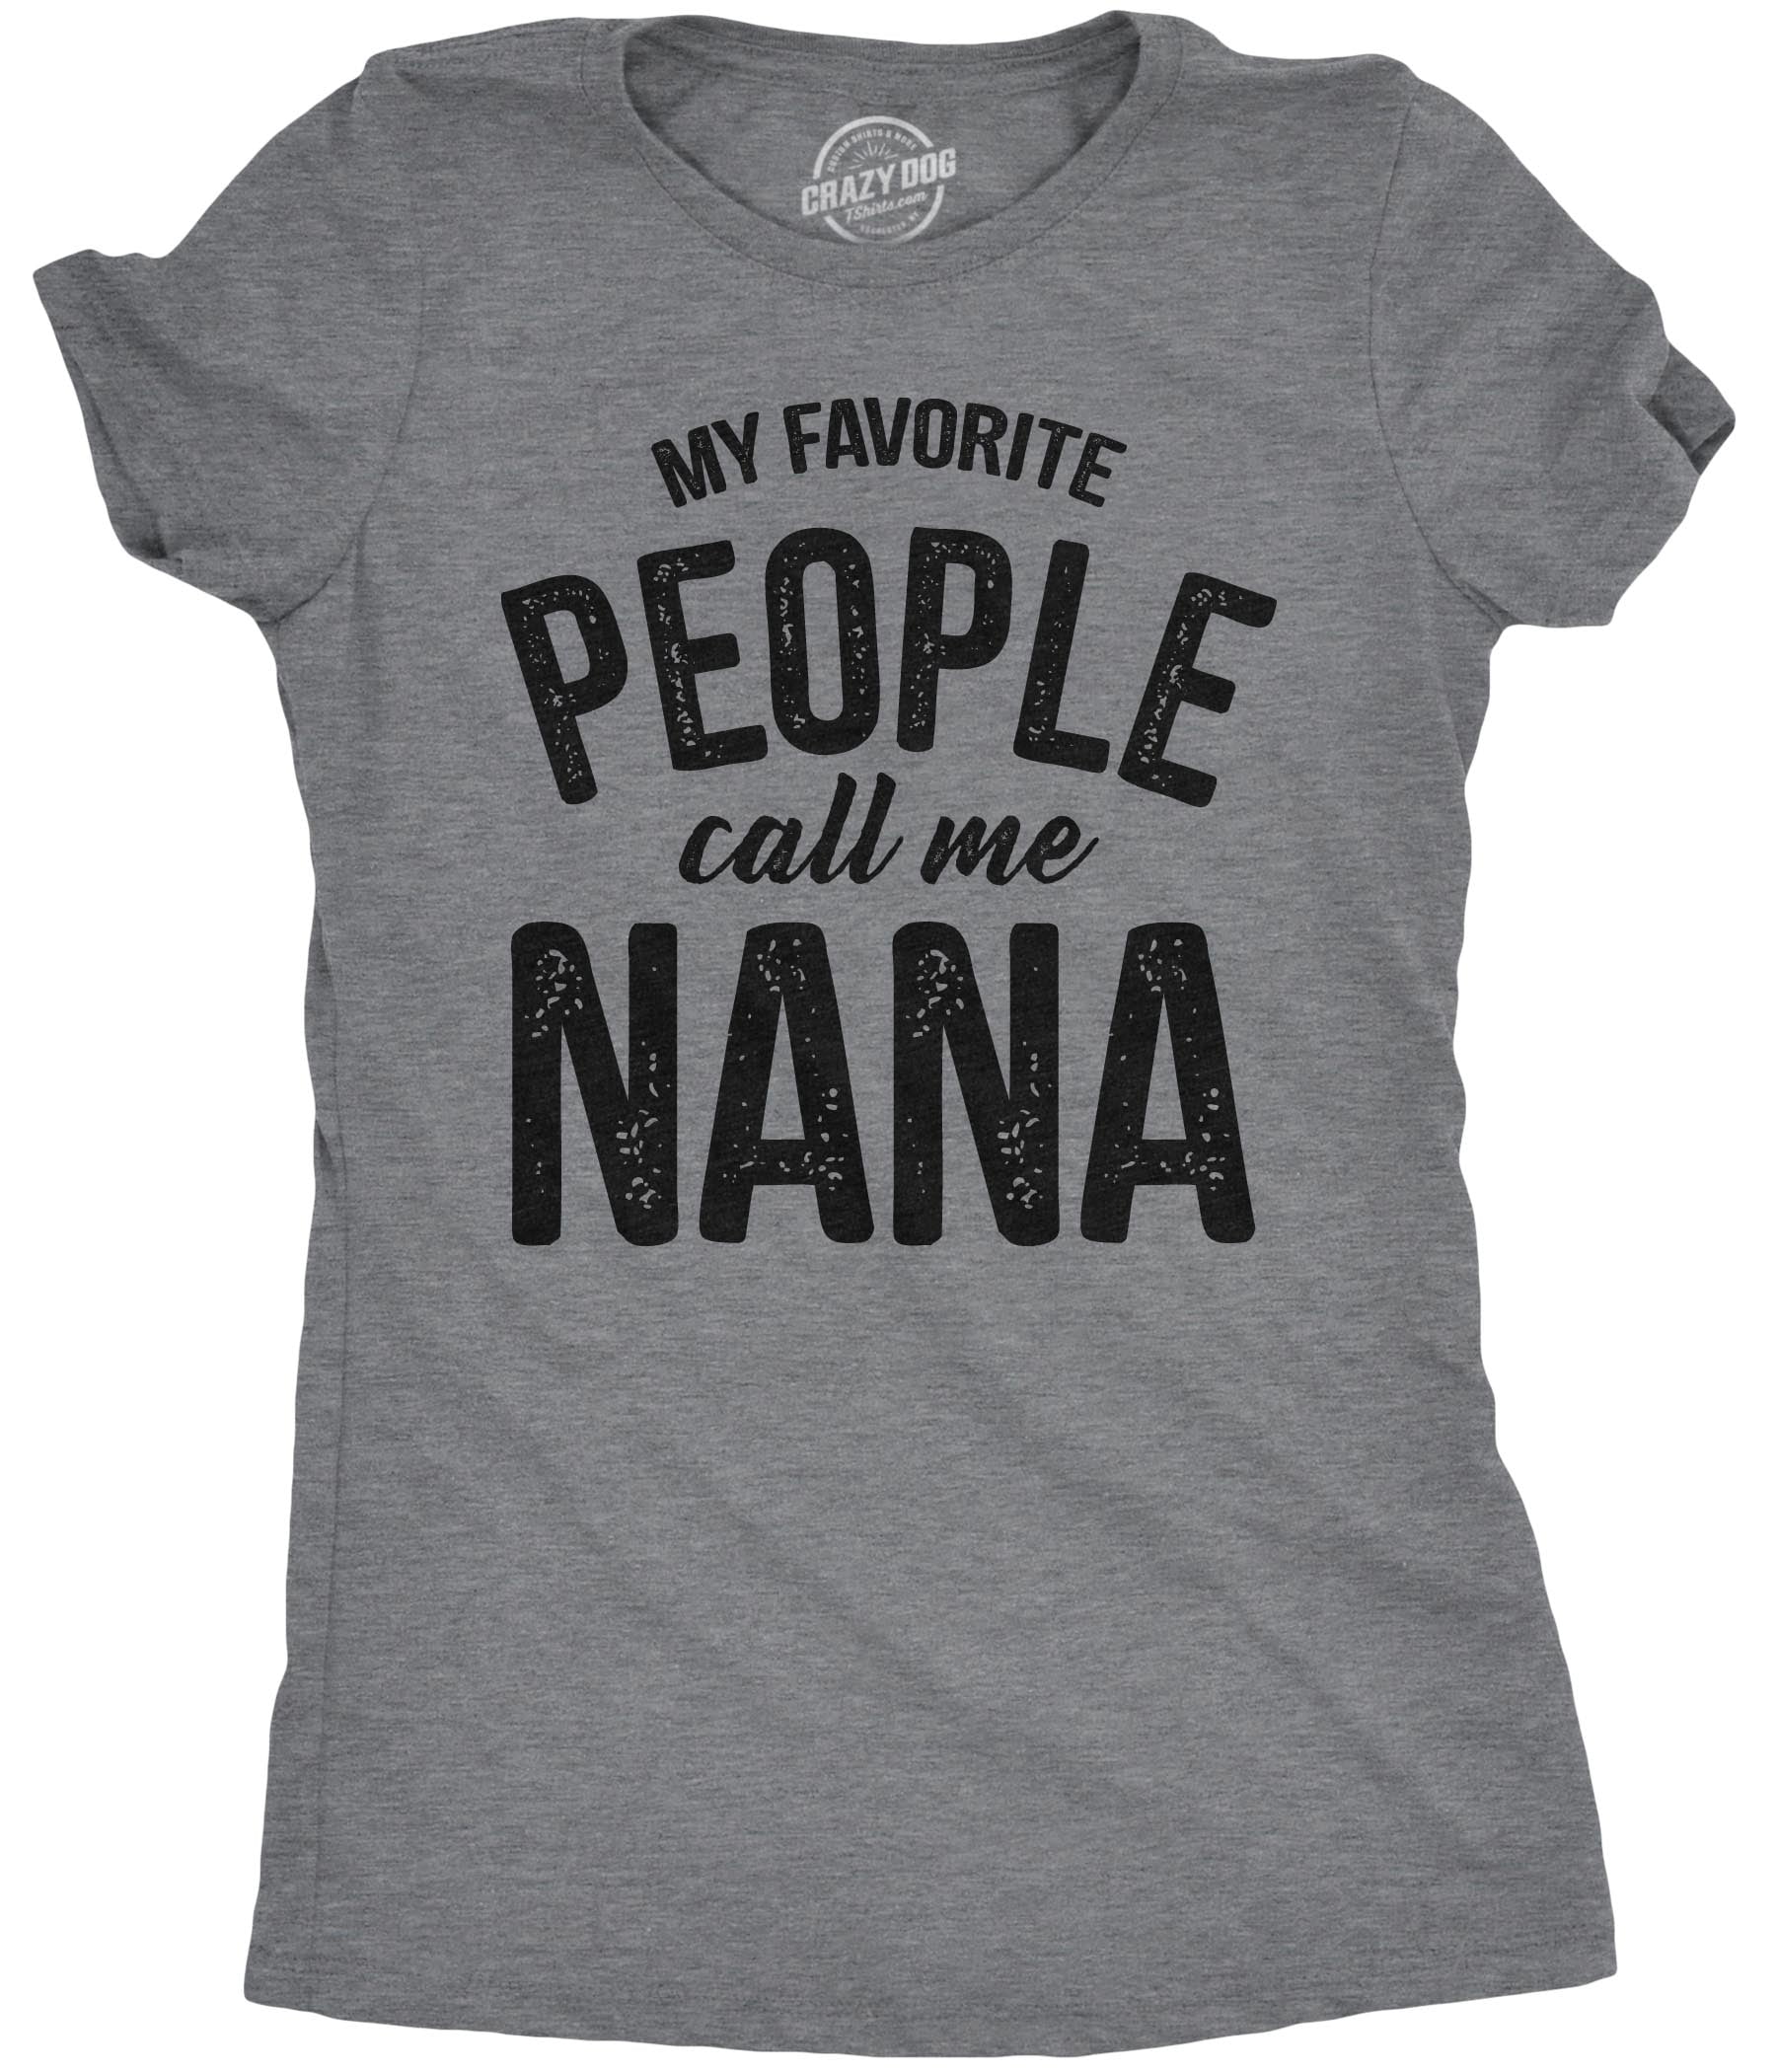 Grandma Rocks Mother's Day Gift Idea for Nana Funny Women Sweatshirt Grandmother 